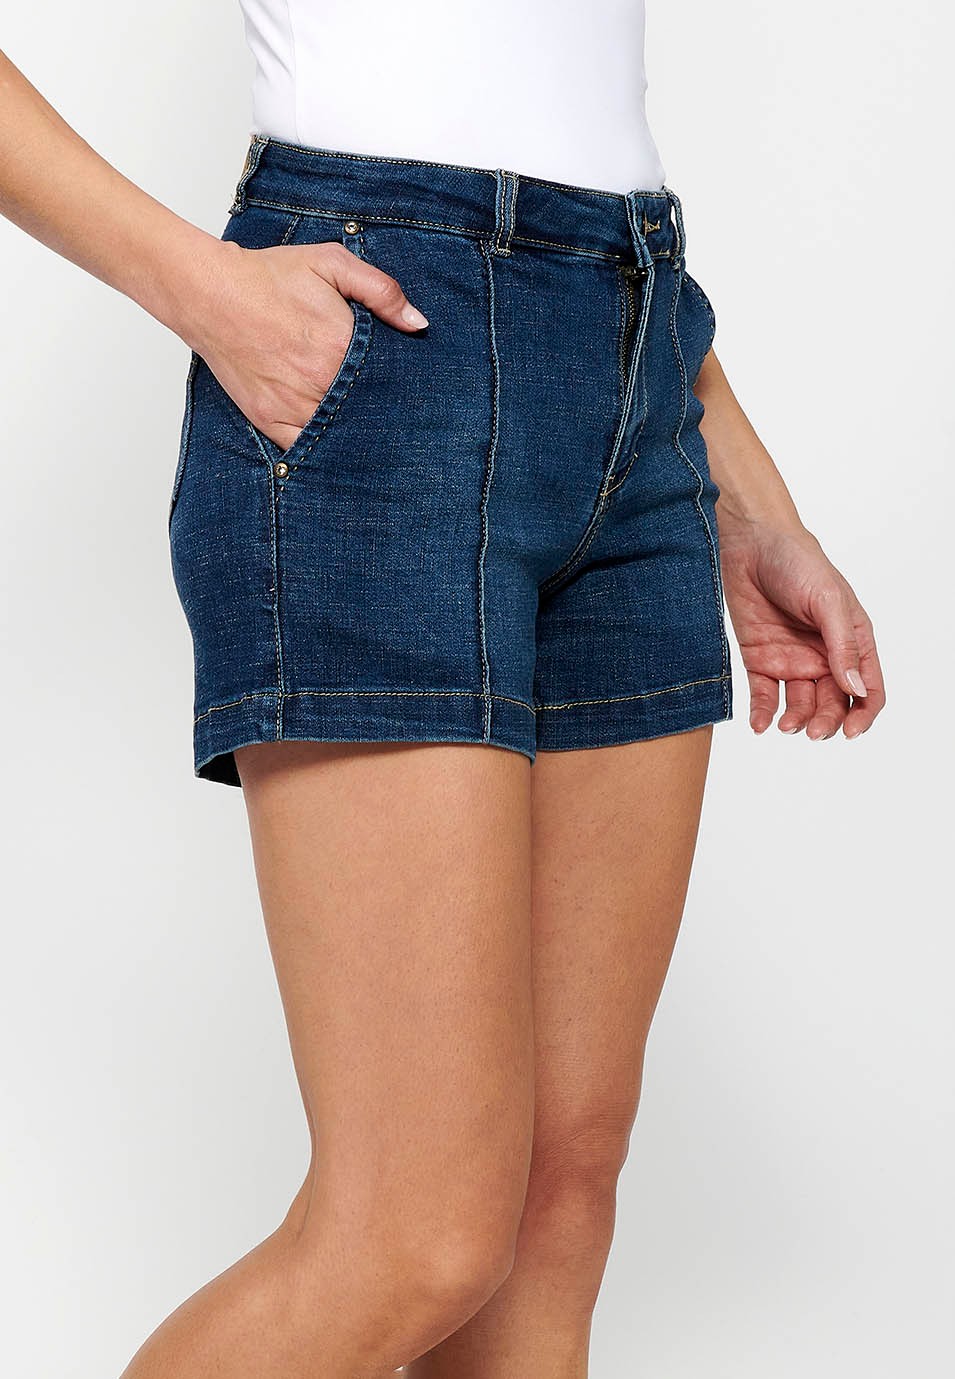 Women's Dark Blue Color Button Zipper Front Closure Flared Shorts 1